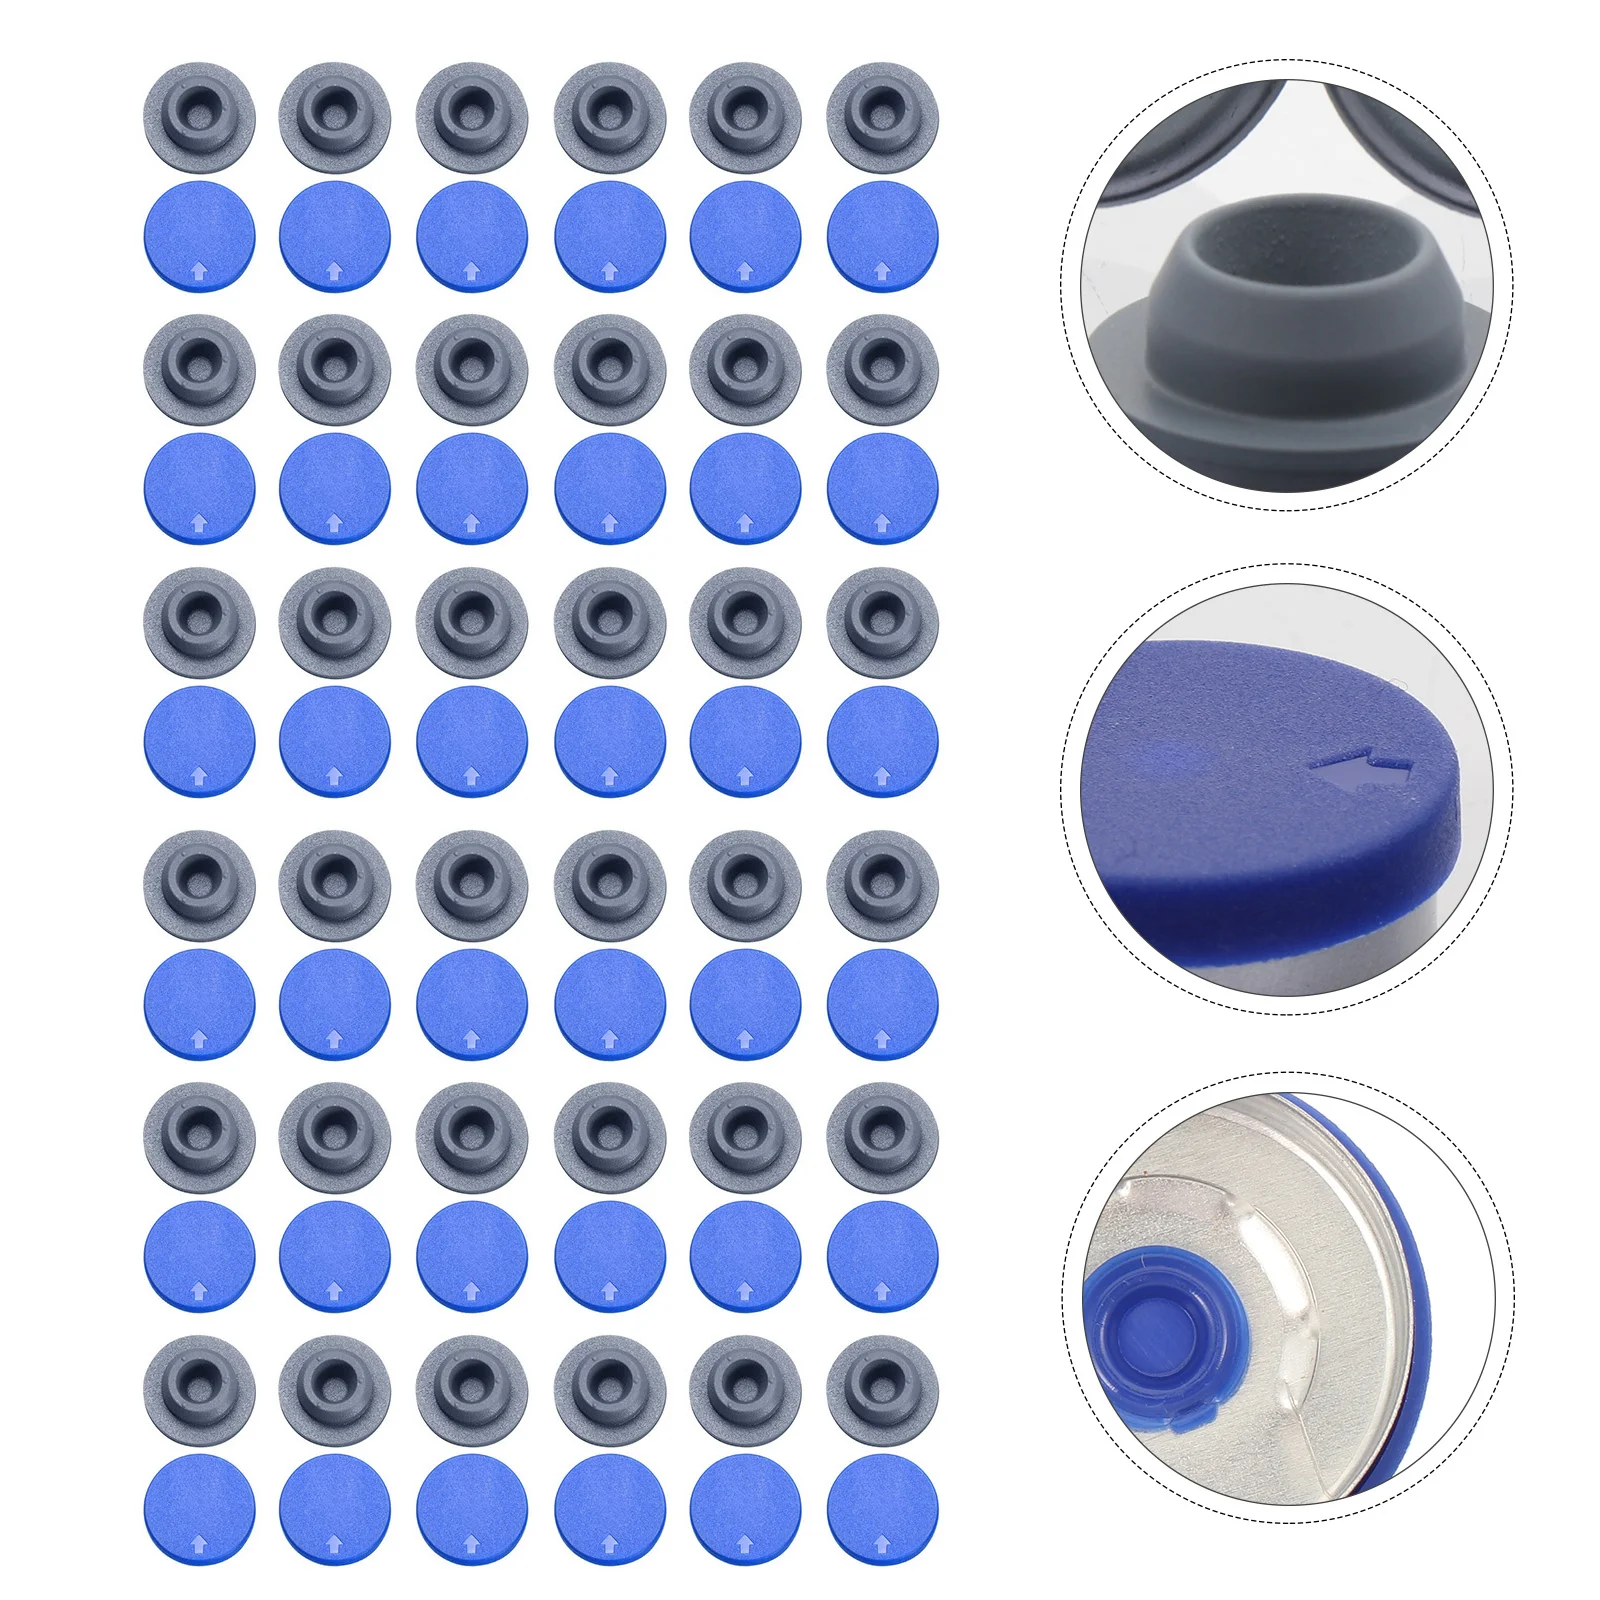 

200 Pcs Aluminum Plastic Cover Caps Rubber Stopper Vial Vials Jars Sealer Safe Bottle Stoppers Hole